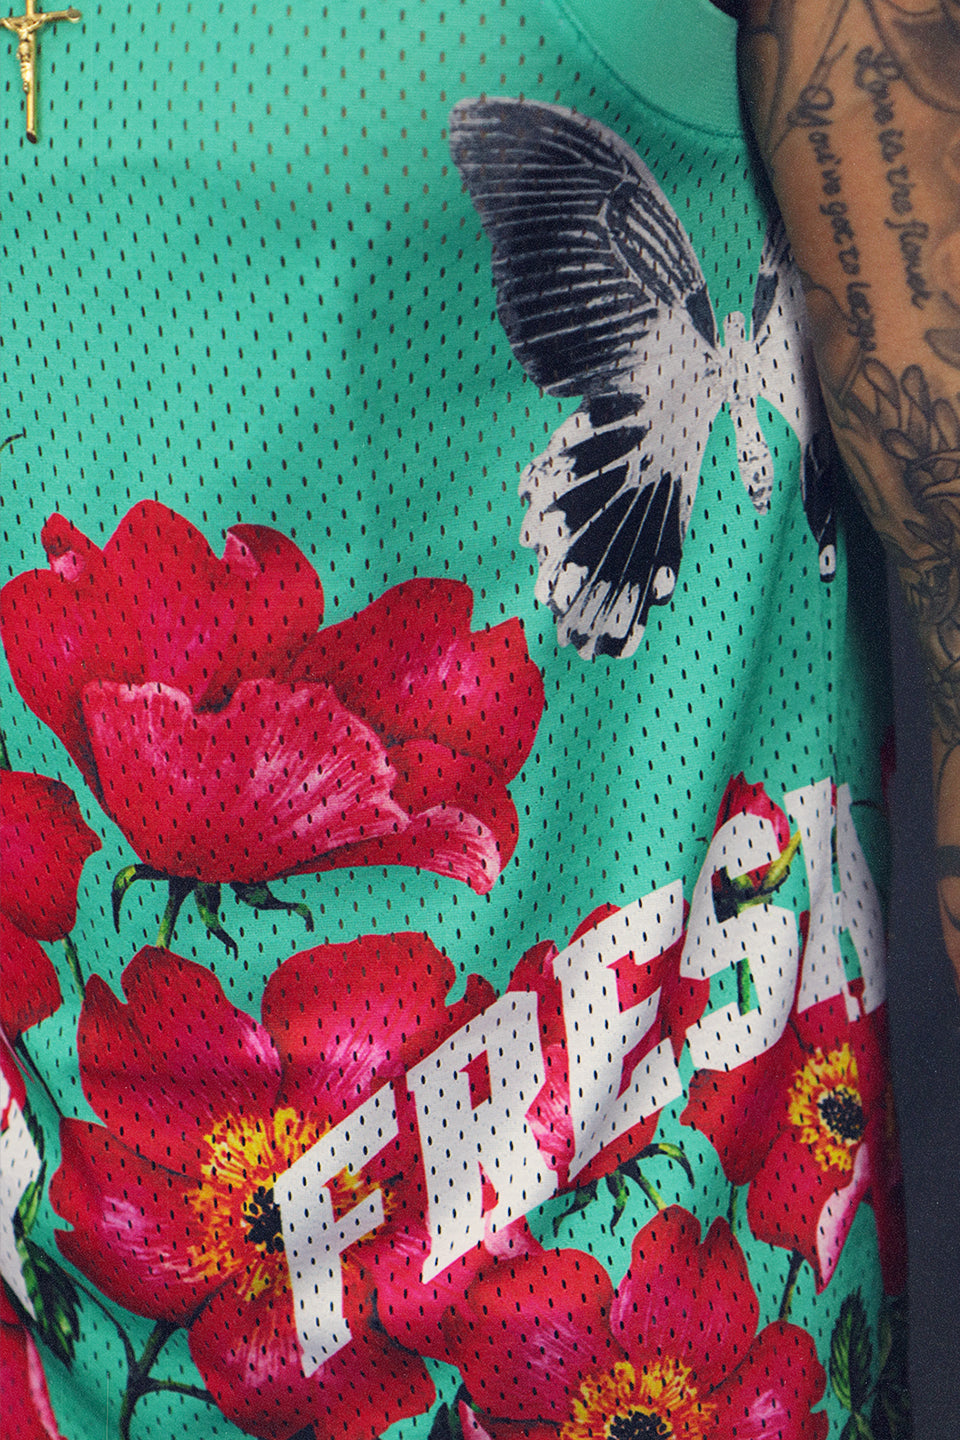 Men's Sleeveless Basketball Shirt Muscle Workout Aqua Sky Floral Mesh Tank Top pattern view